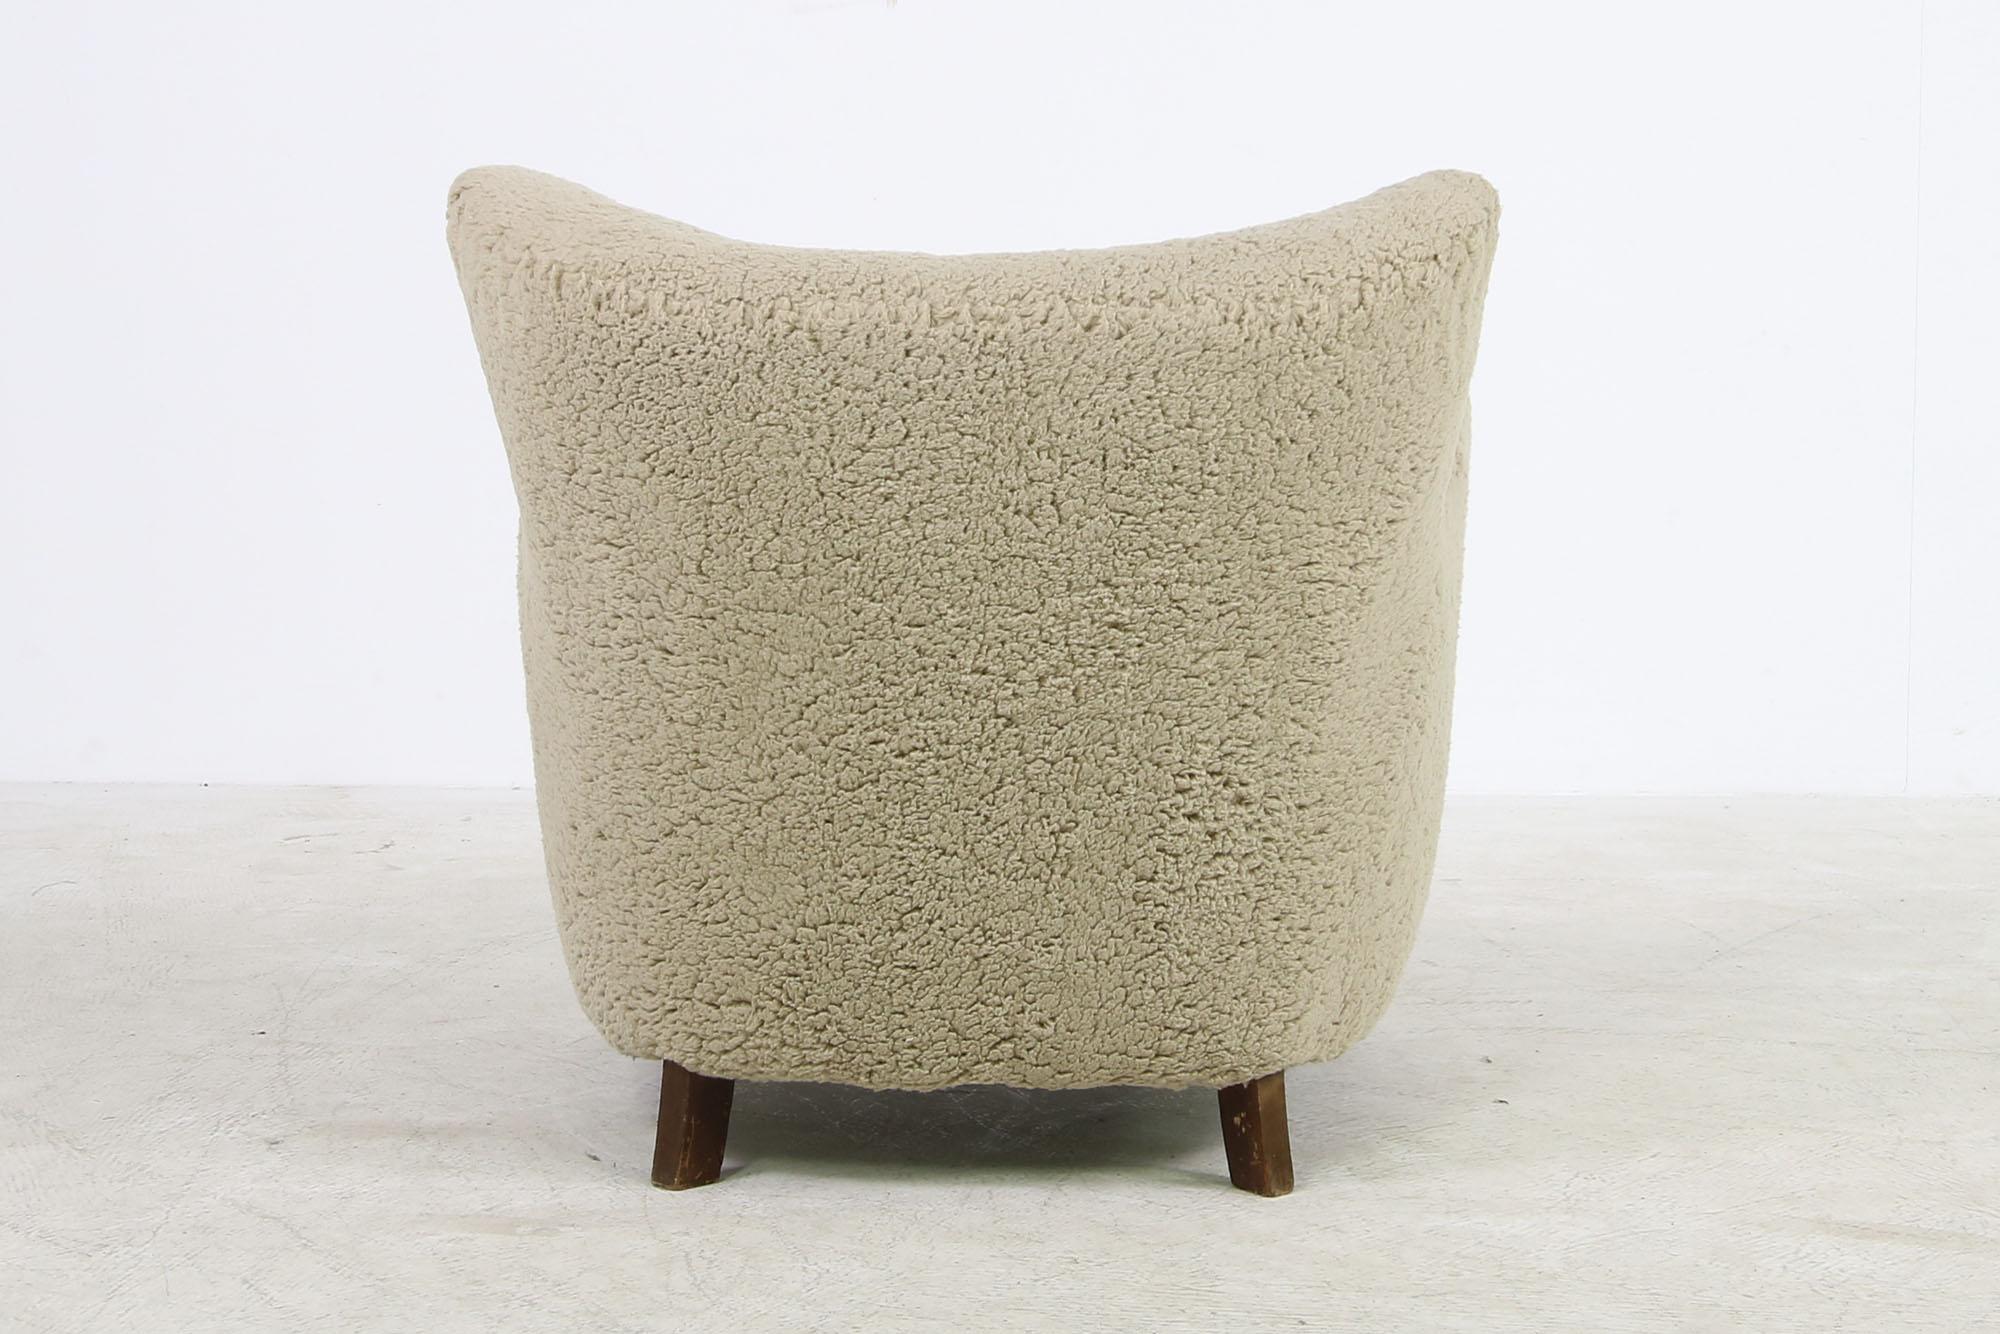 Danish Scandinavian Modern Lounge Chair 1950s Teddy Fur & Leather, Sheepskin, Denmark C